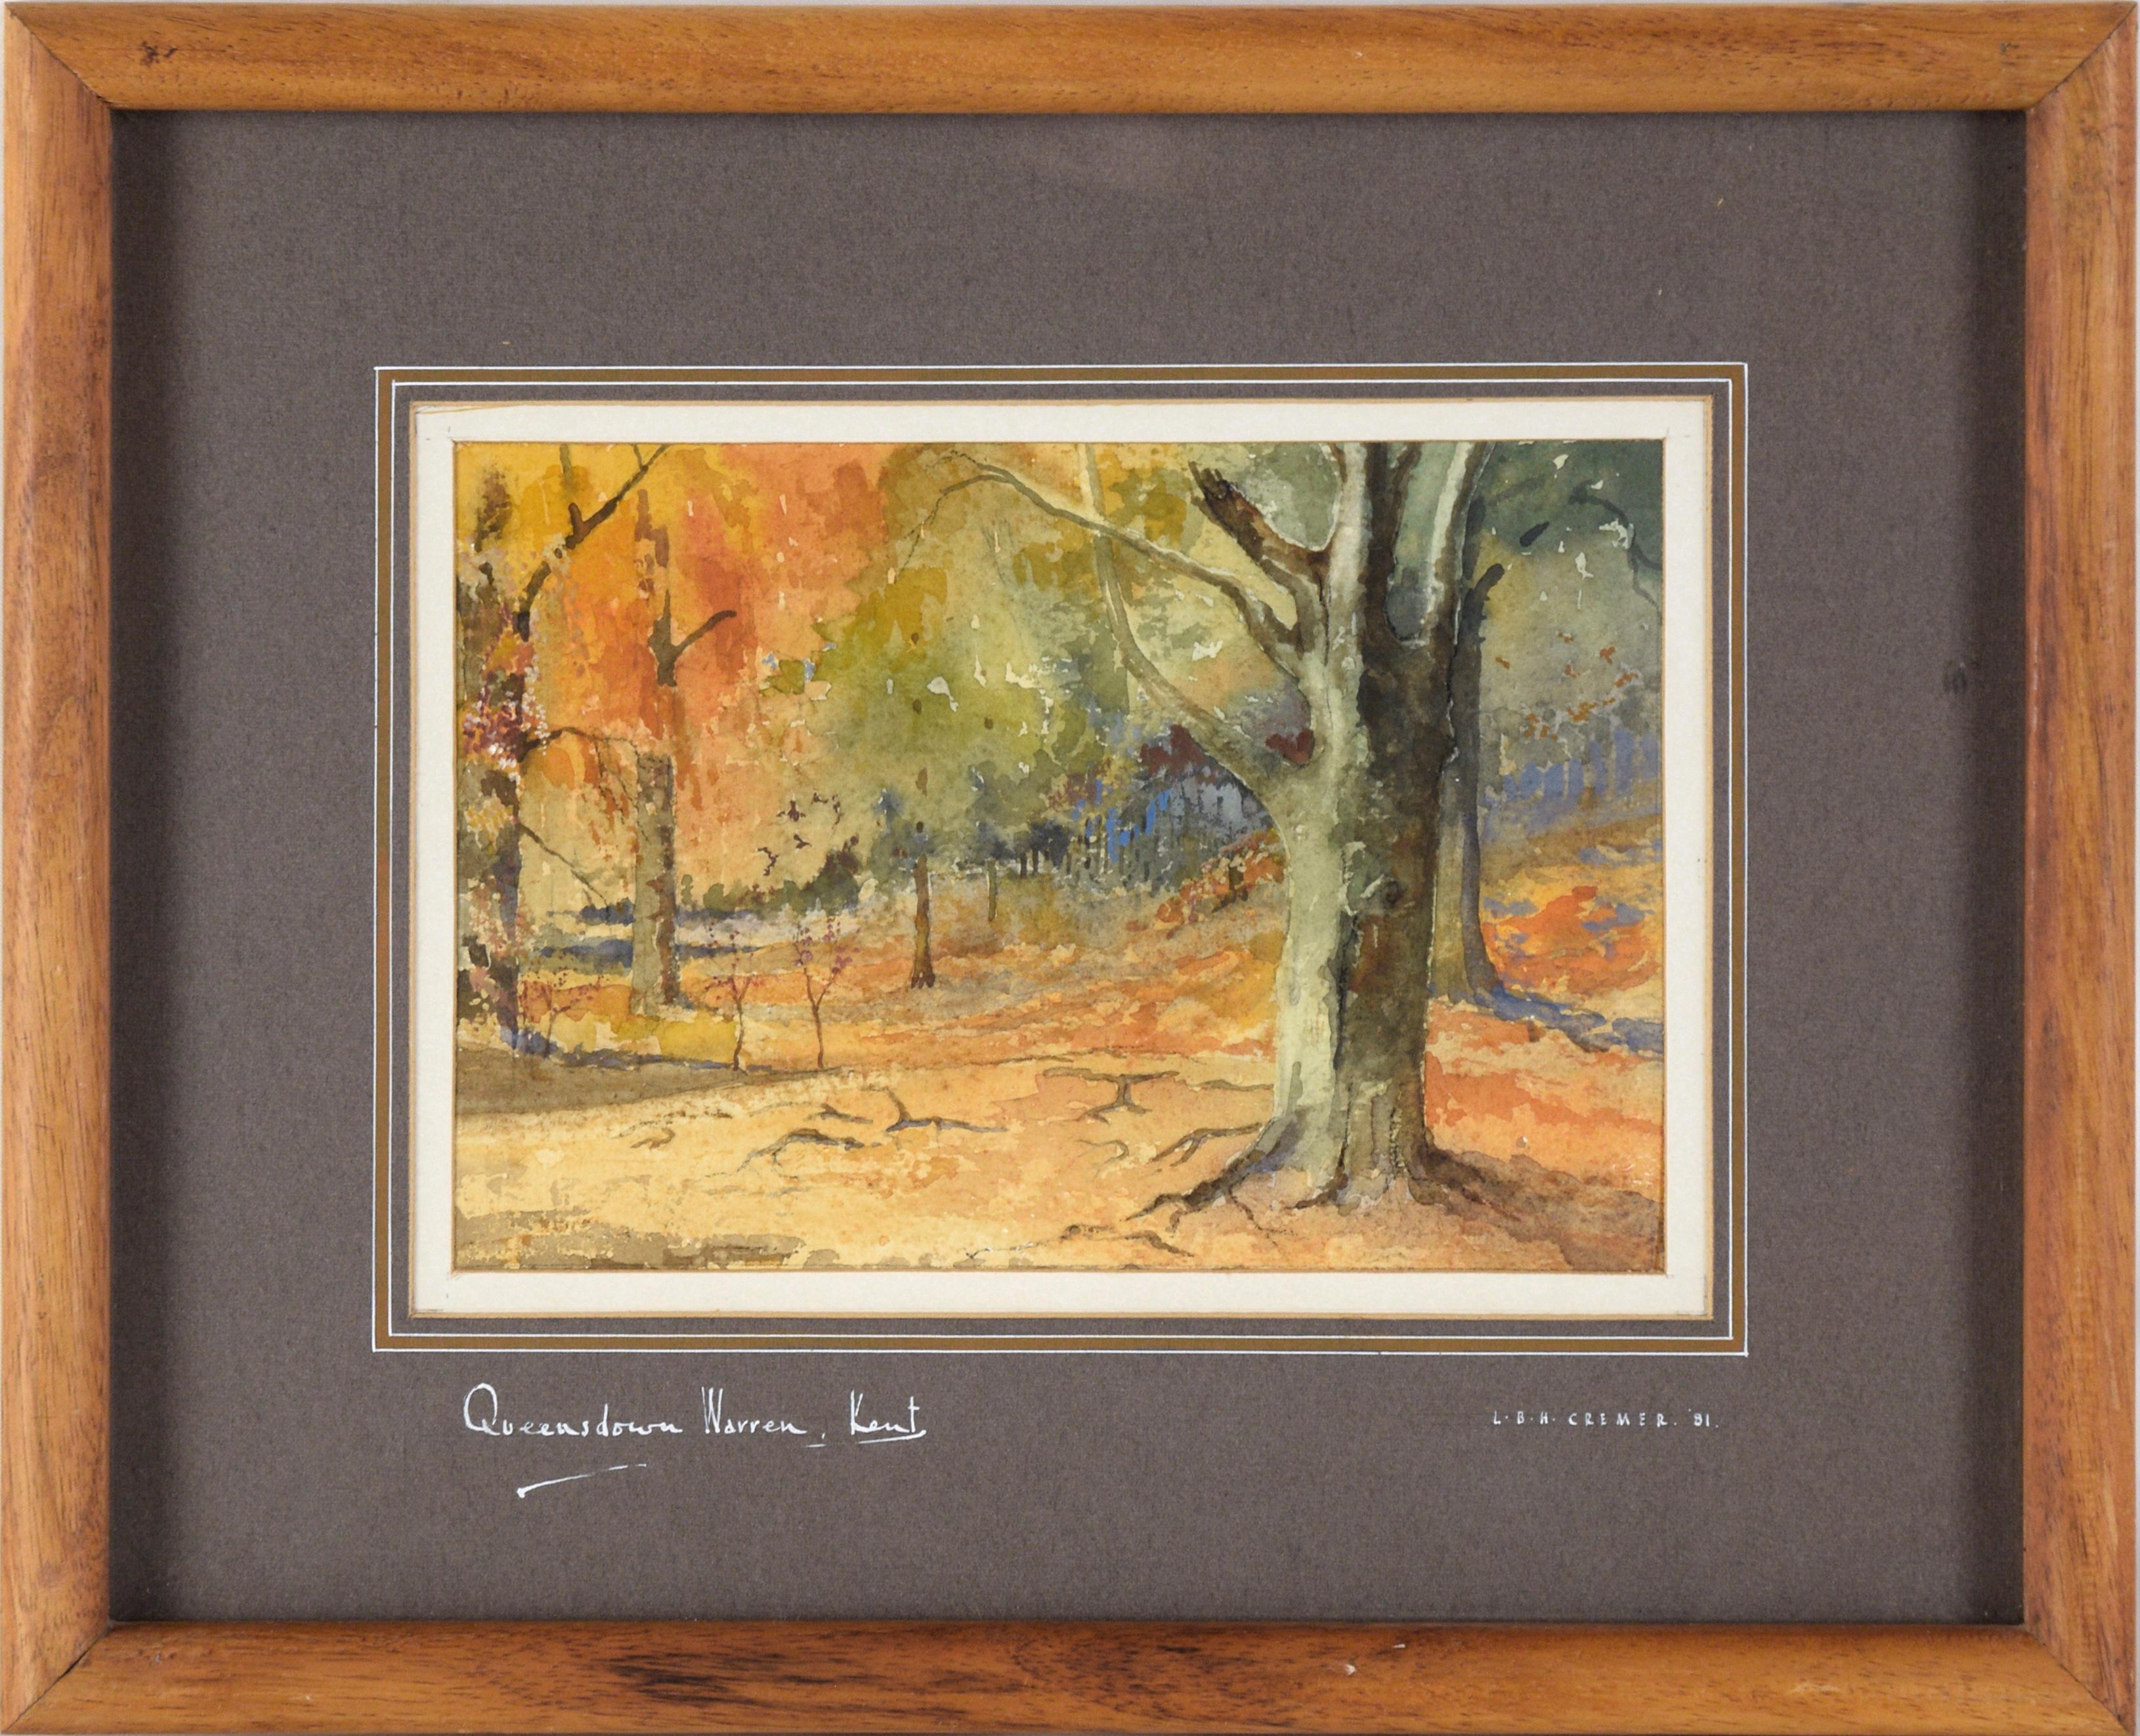 L B H Cremer Landscape Art - Queensdown Warren, Kent - Autumn Forest Interior Landscape in Watercolor